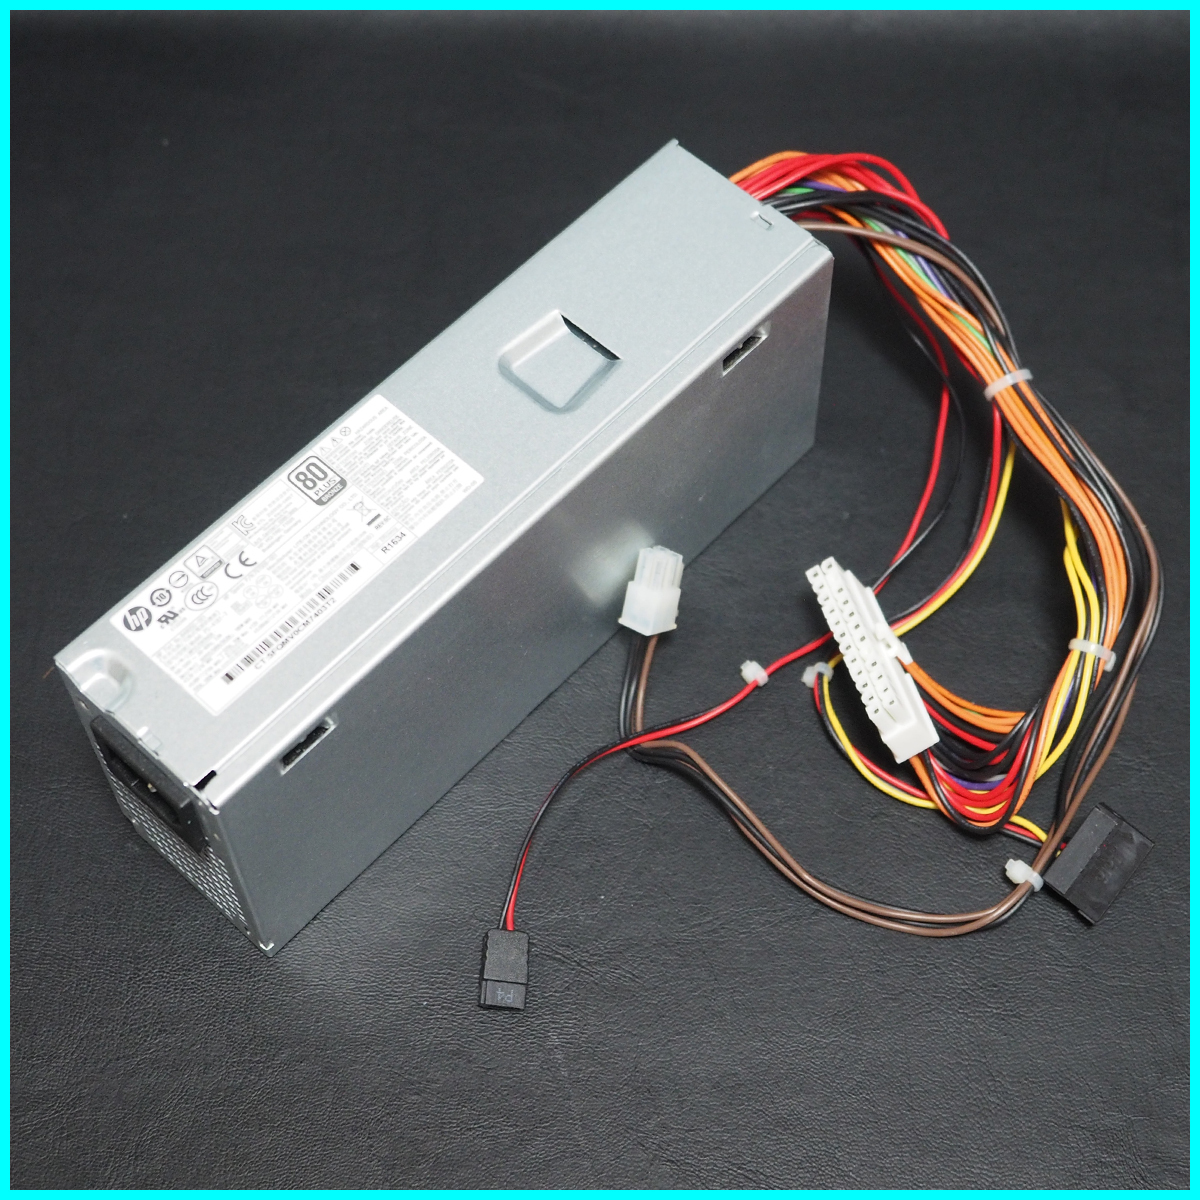 HP ProDesk 400 G3 SFc power supply LITE-ON PS-4181-7 HP Part No.:848050-001 80PLUS BRONZE 180W